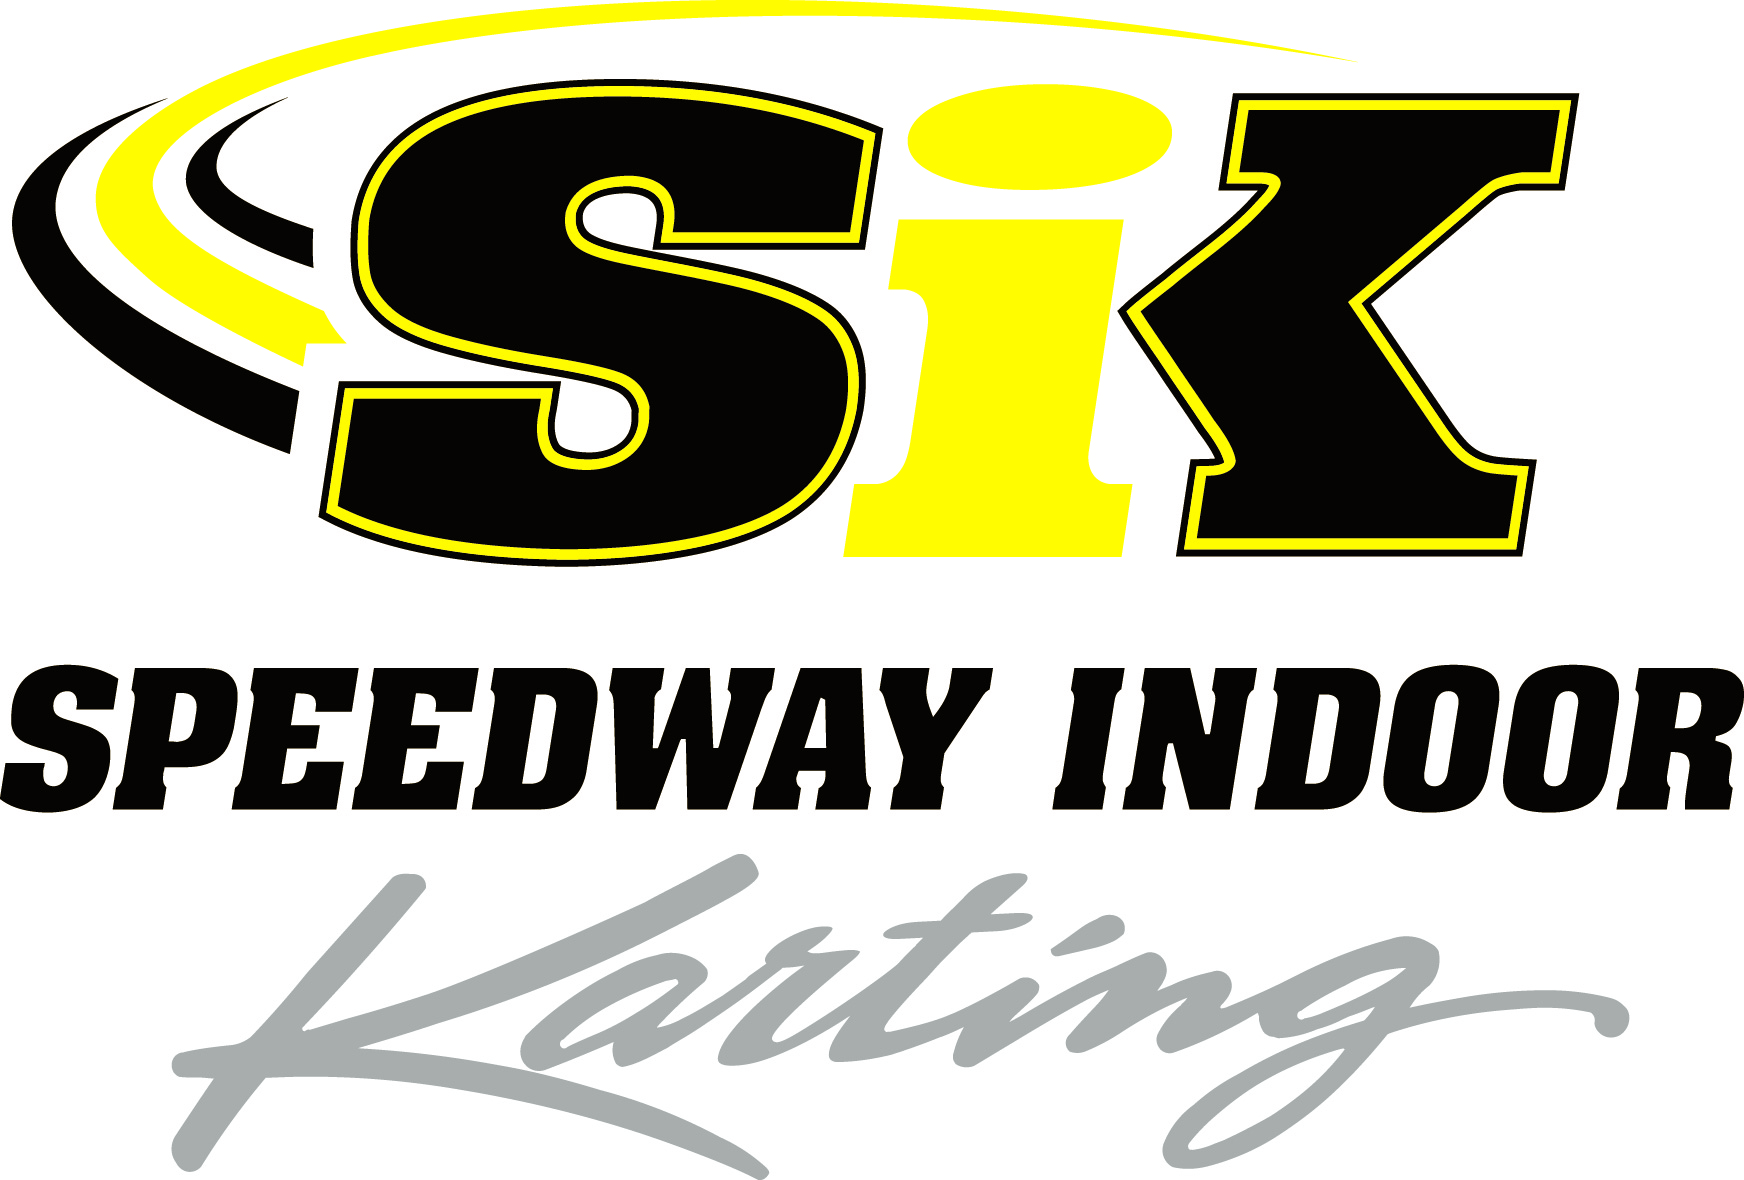 Speedway Indoor Karting - Daytona